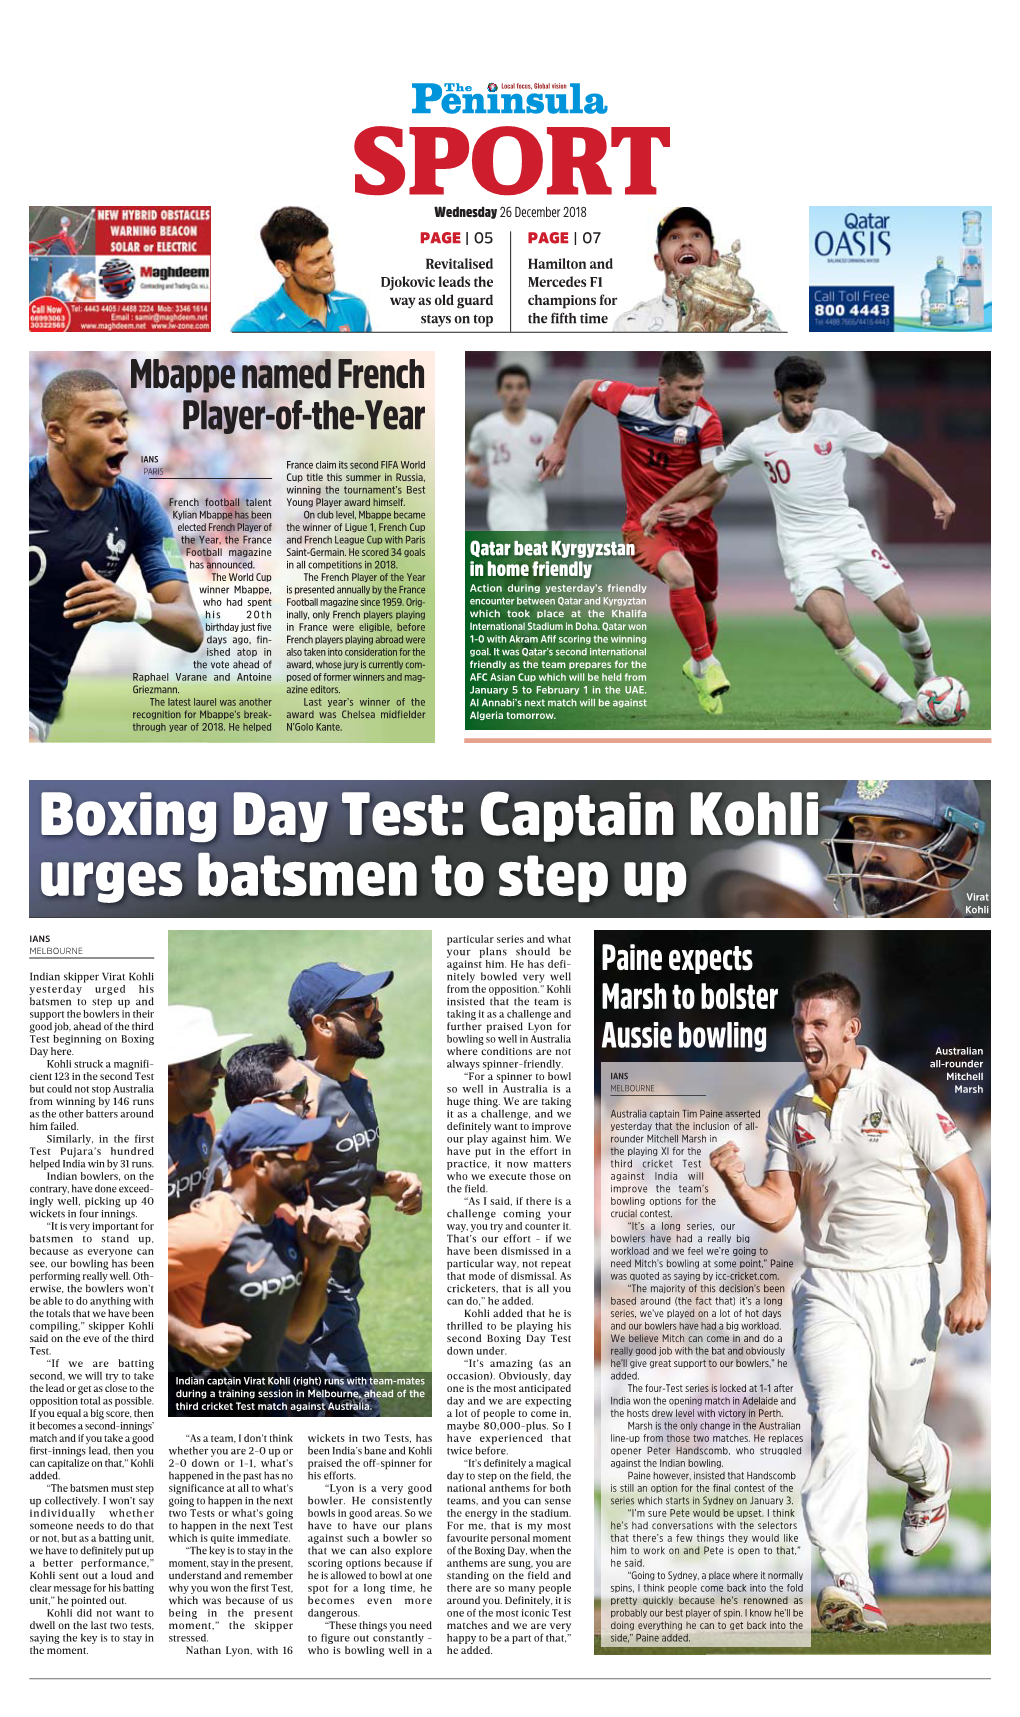 Boxing Day Test: Captain Kohli Urges Batsmen to Step Up